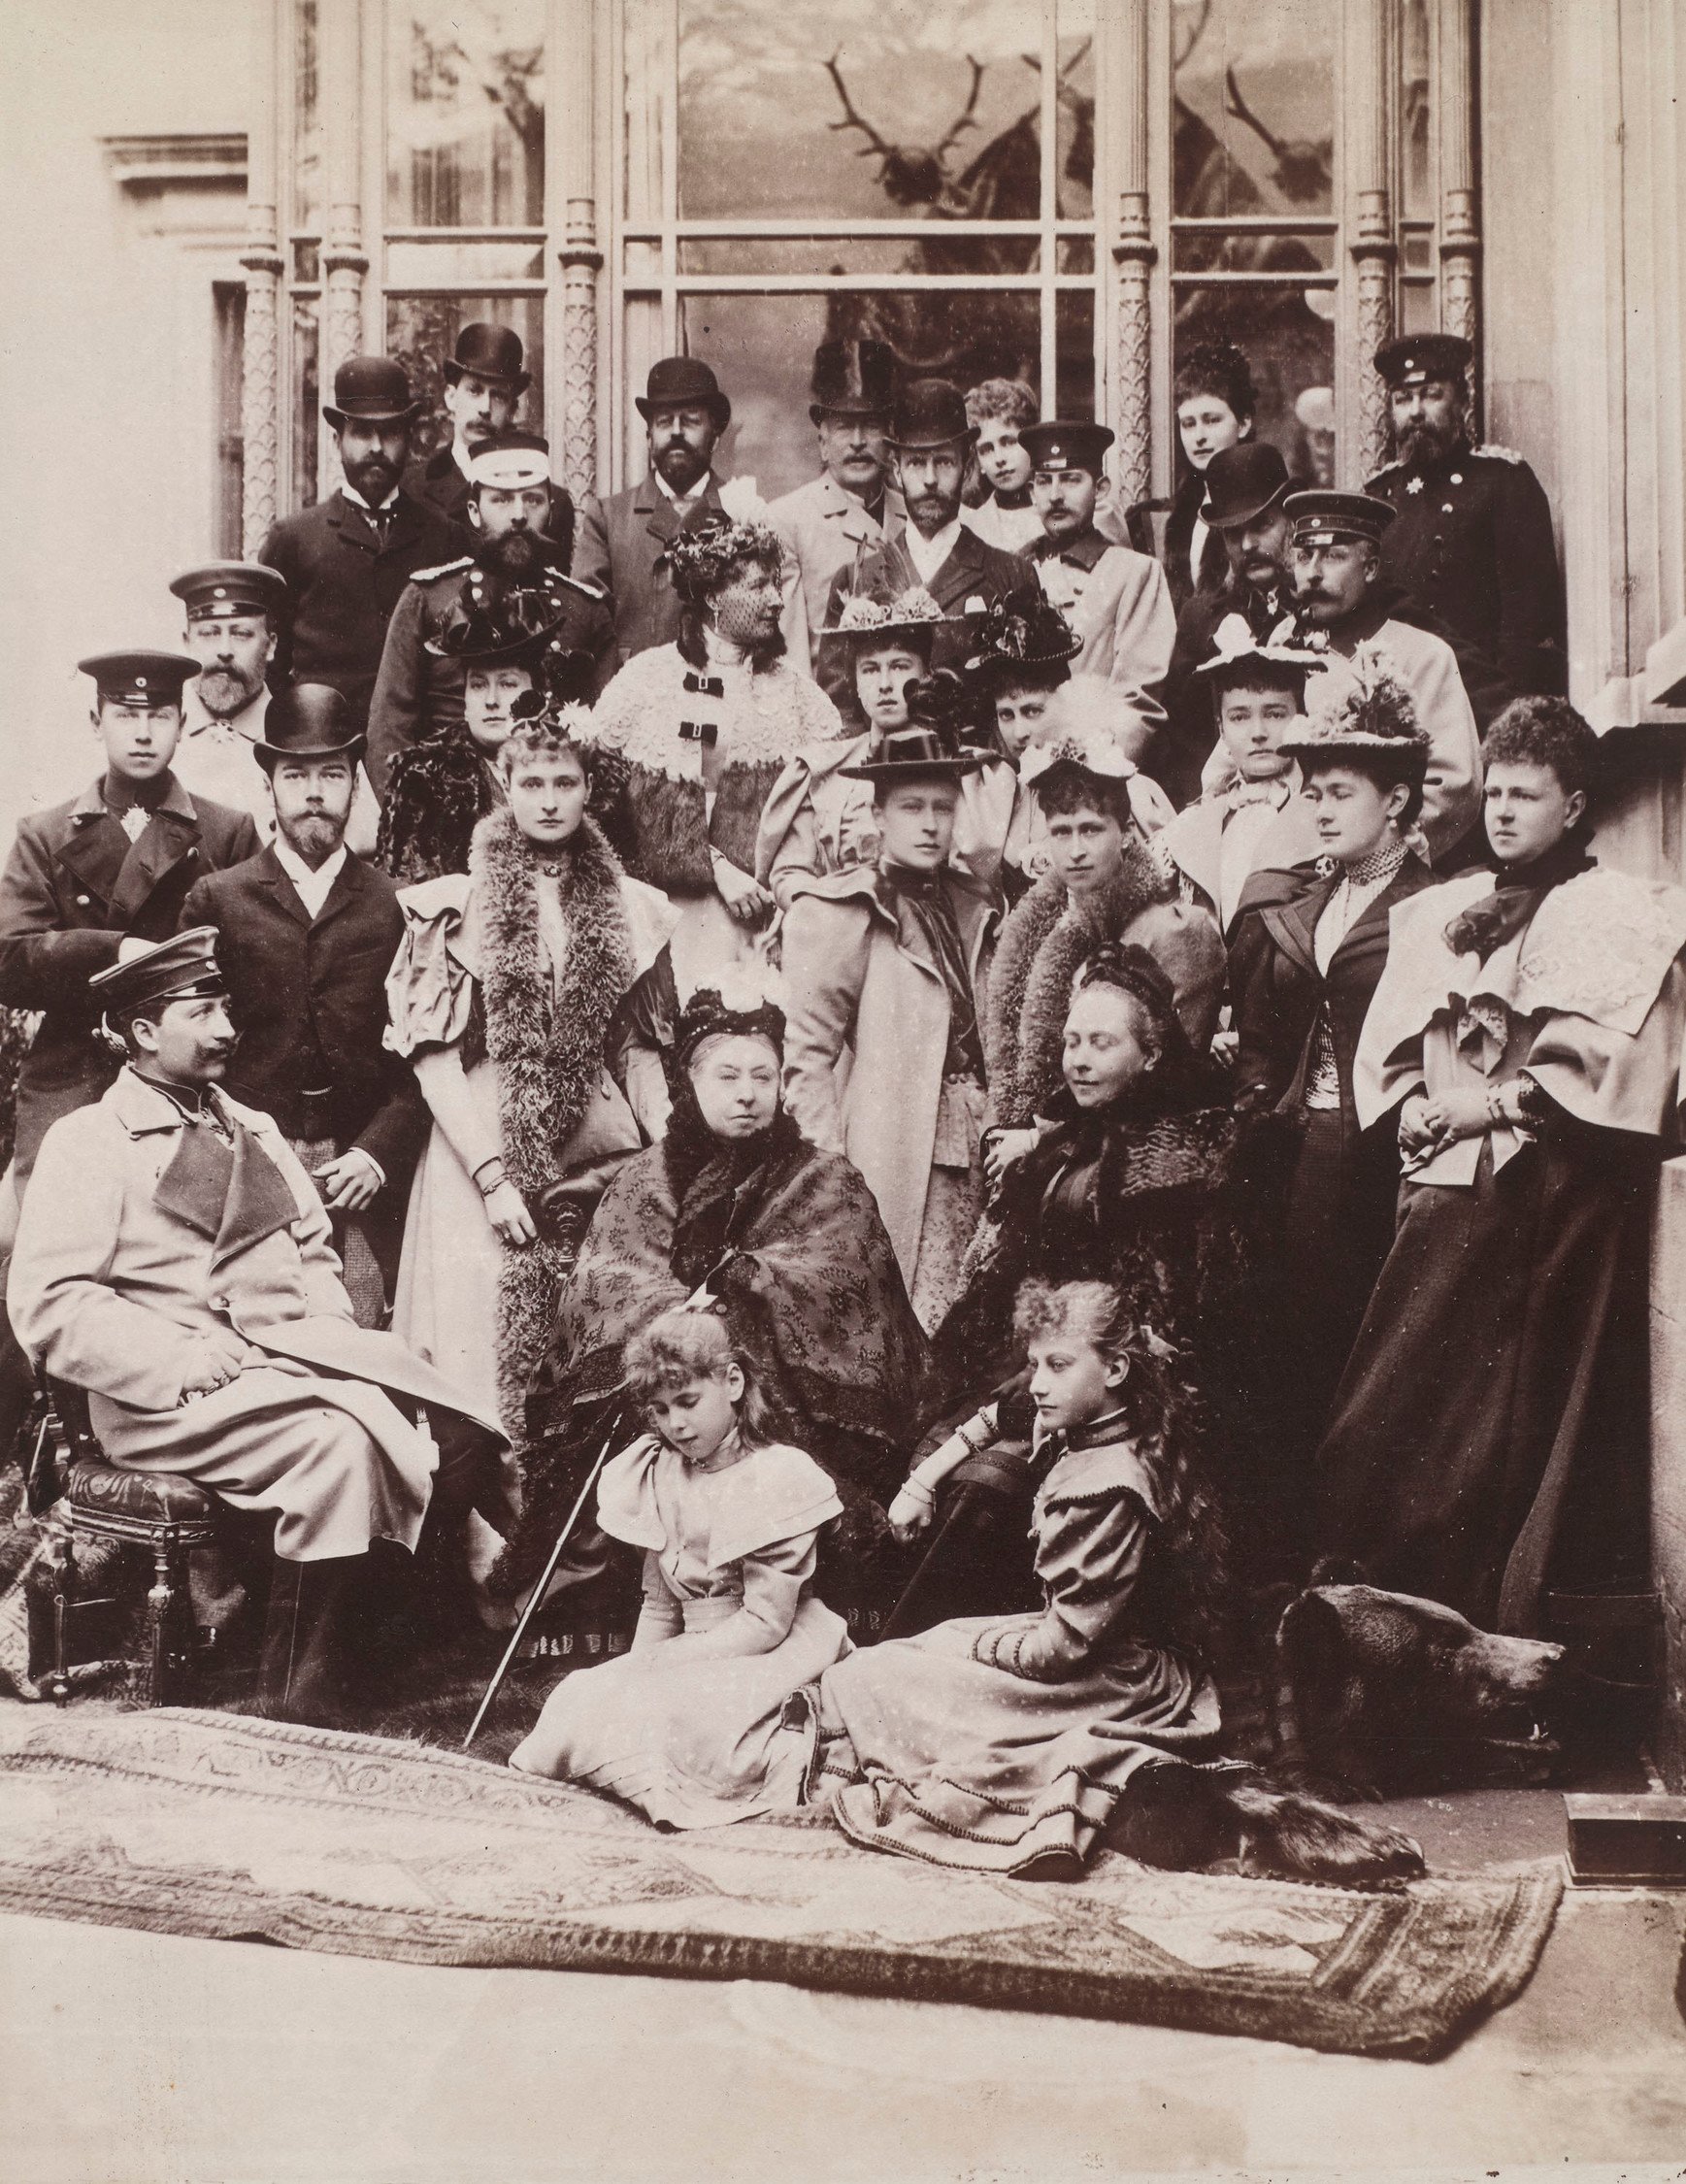 Photograph of Queen Victoria and her descendants